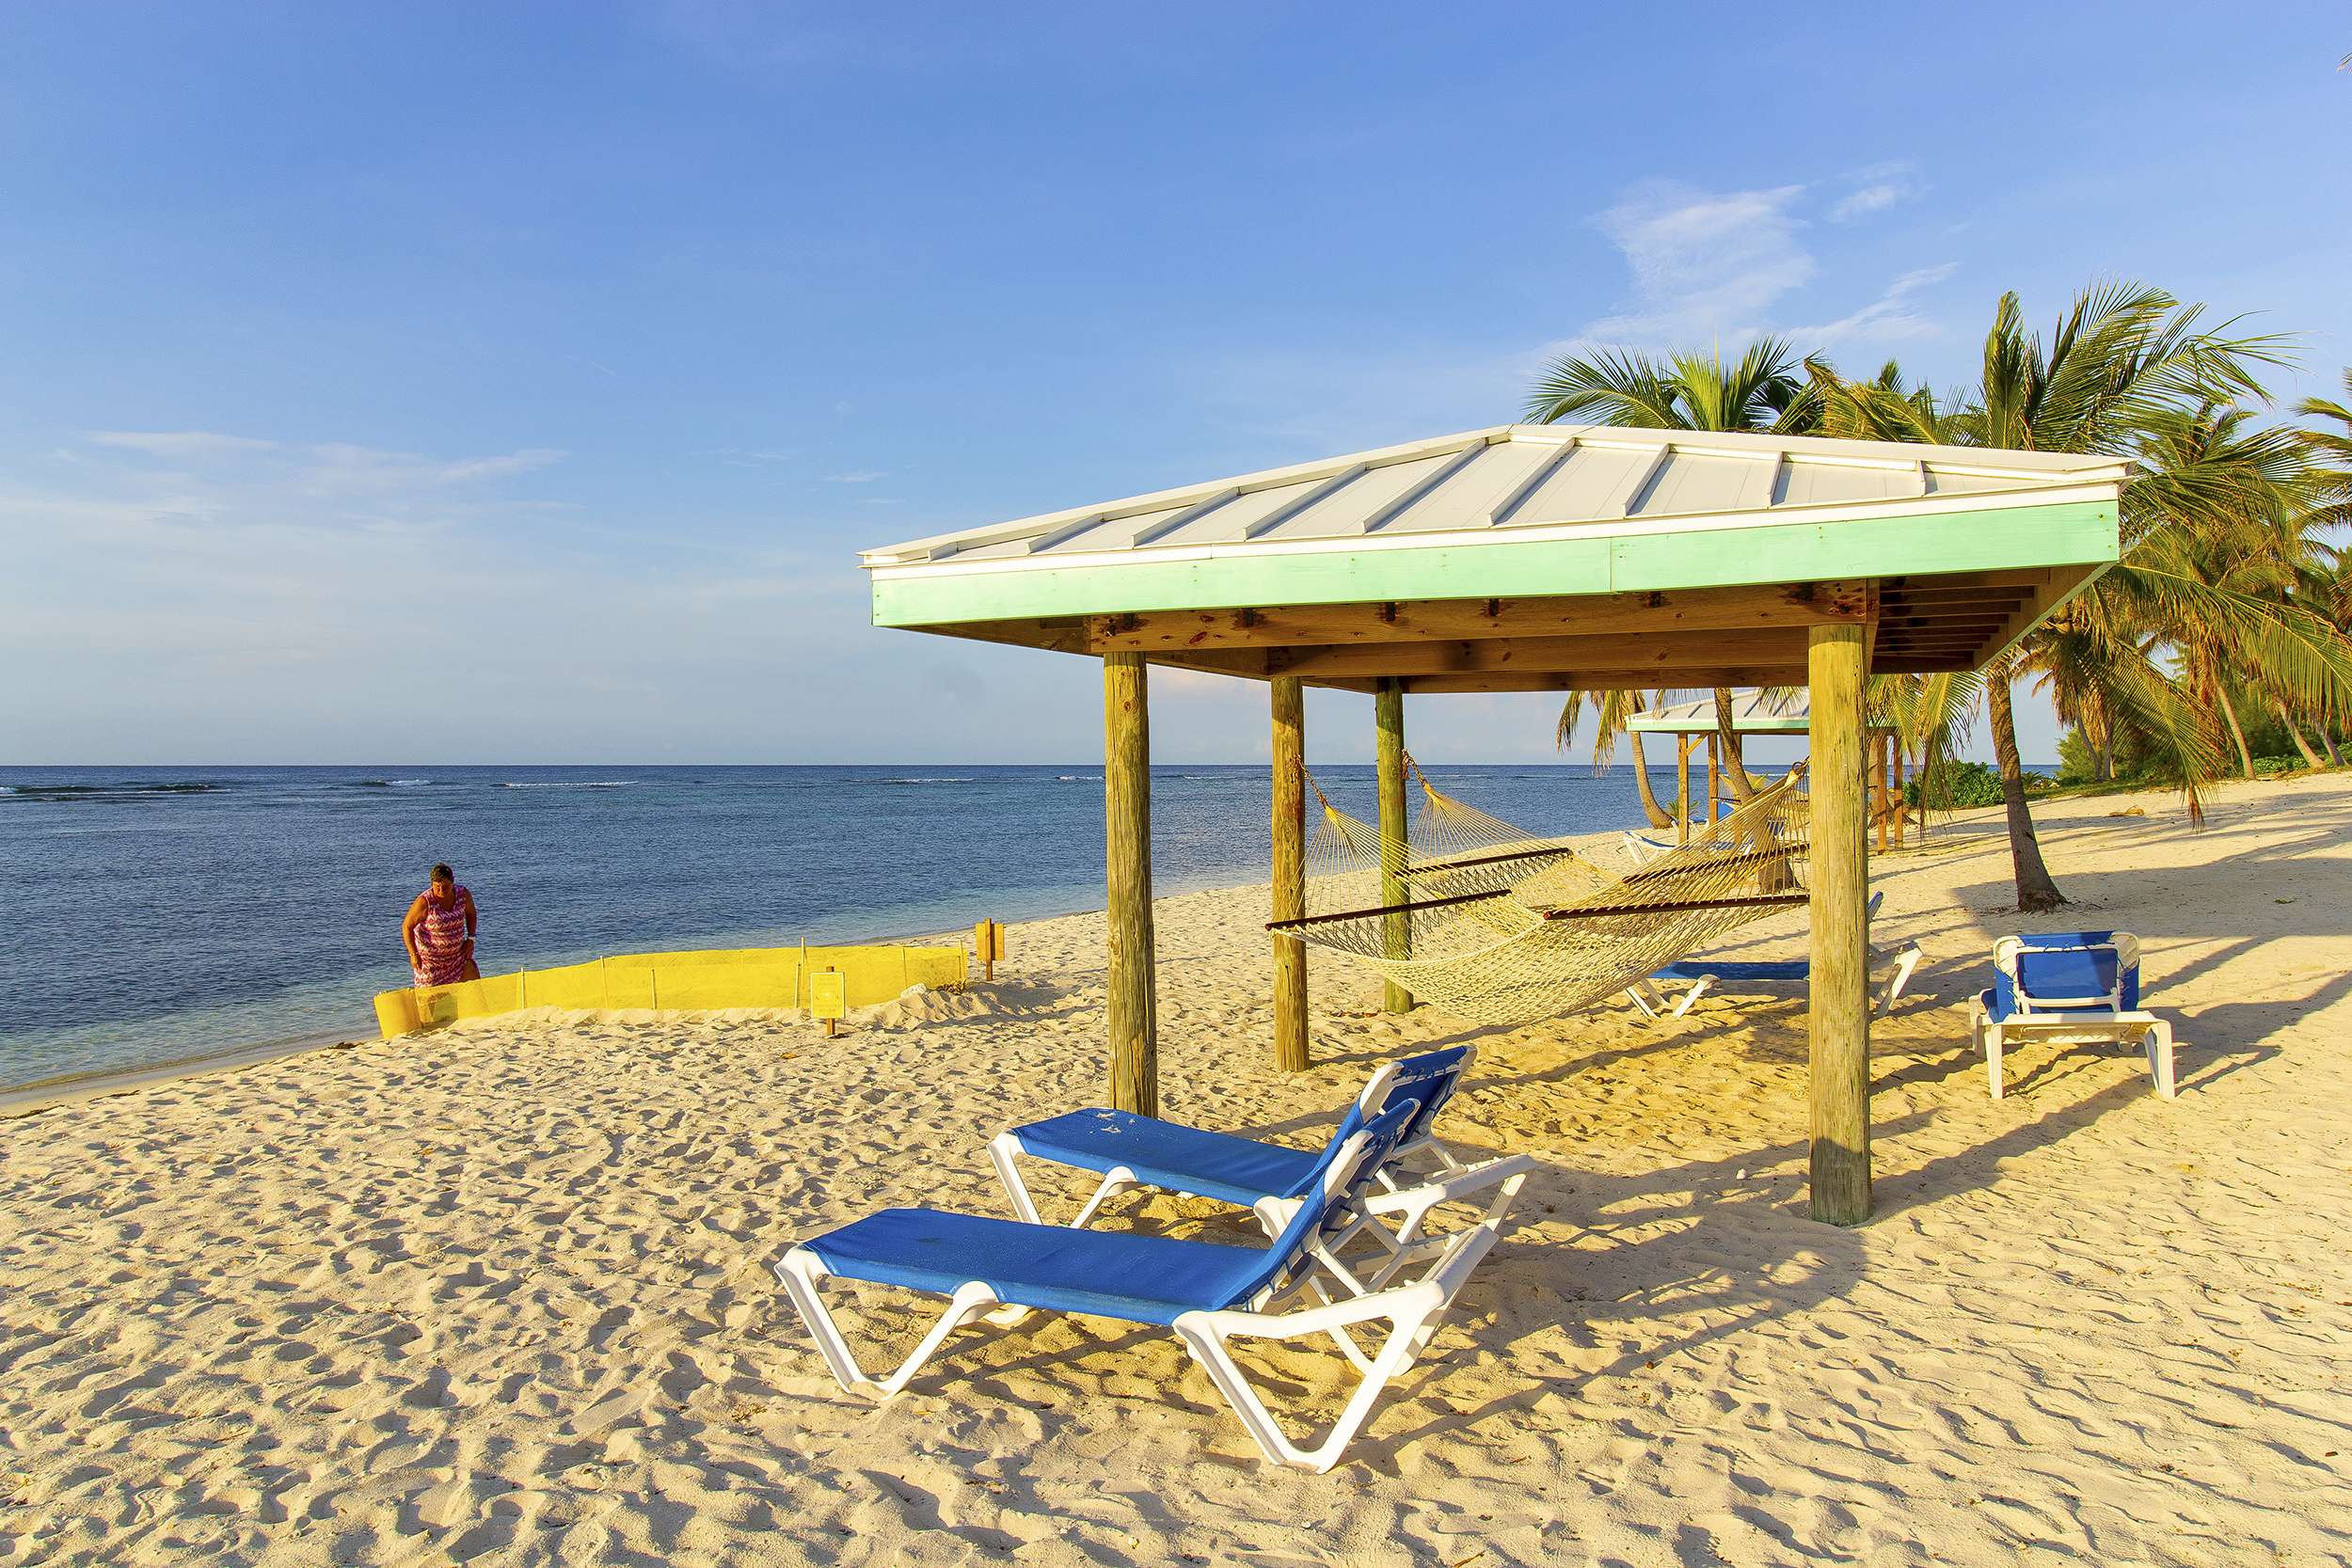 Cayman Brac Reef Beach Resort - Cayman Brac, Cayman Island beach area